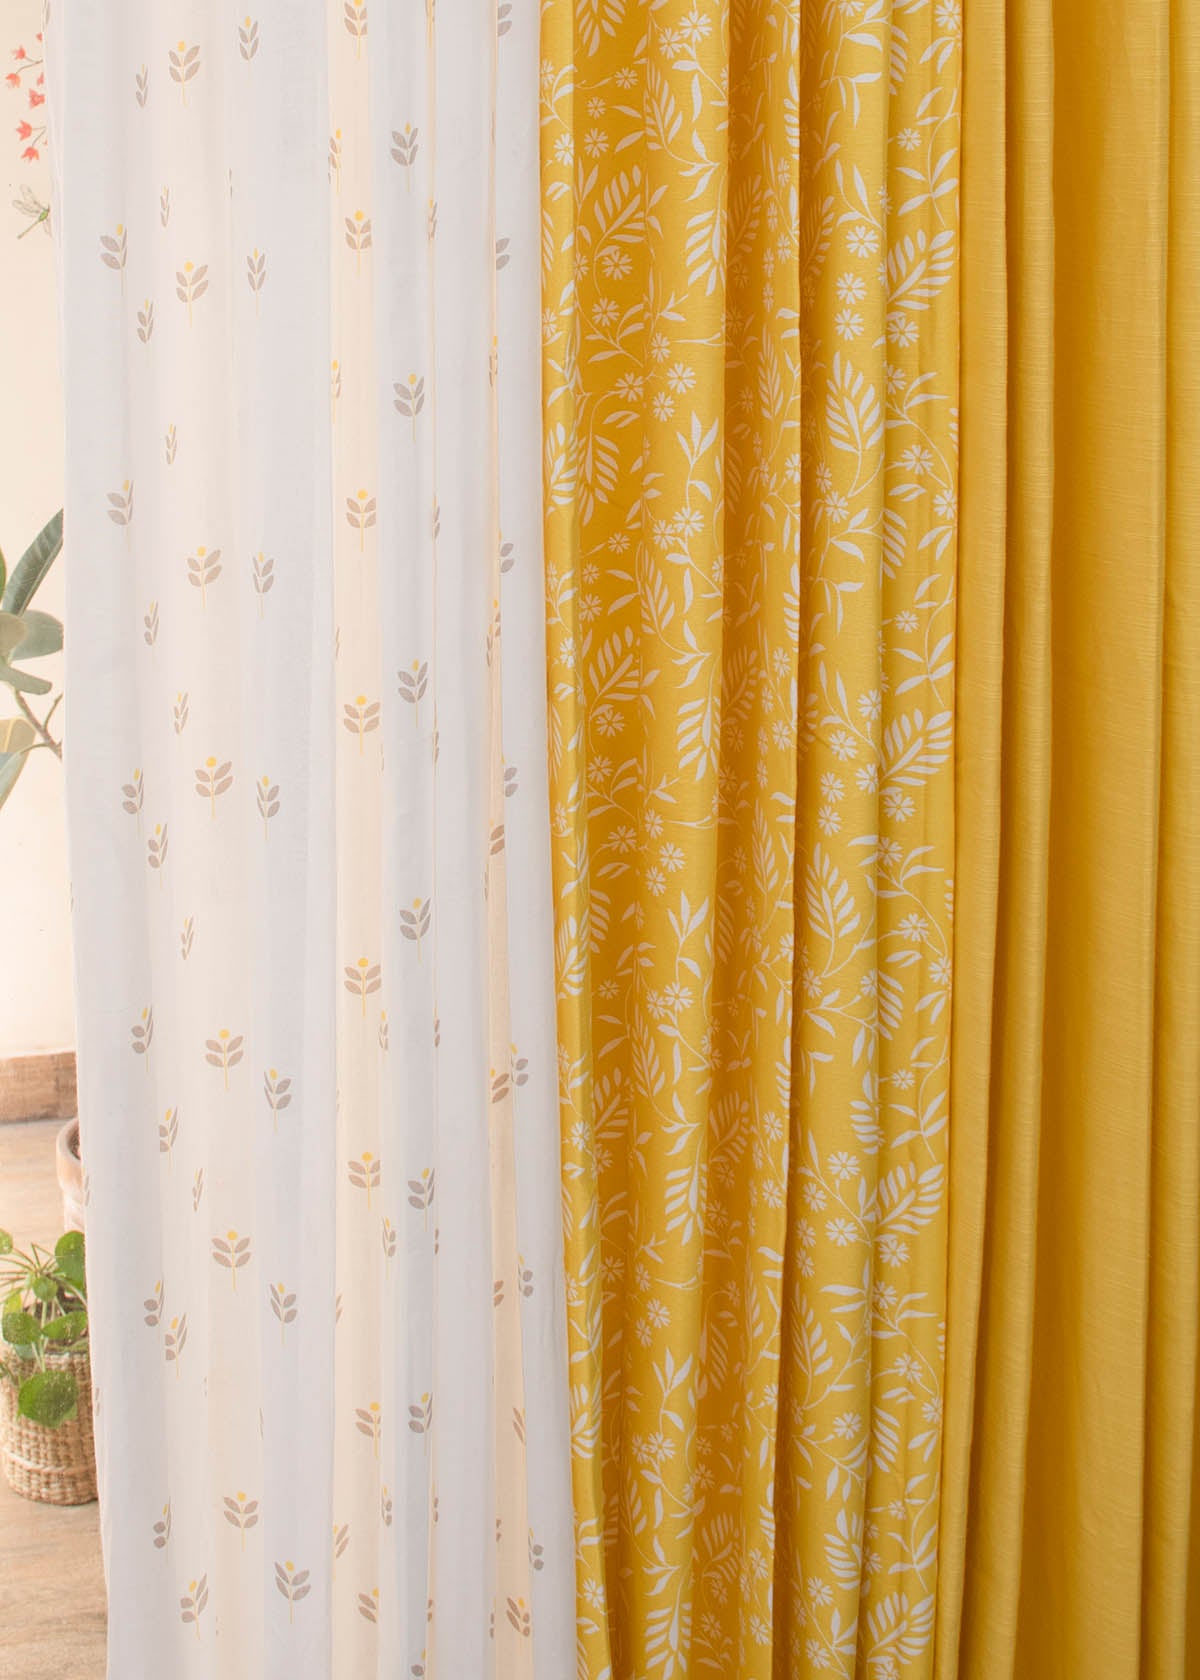 Primrose Yellow Solid,Yellow Daisy,Sapling Primrose Yellow Sheer Set Of 6 Combo Cotton Curtain - Yellow